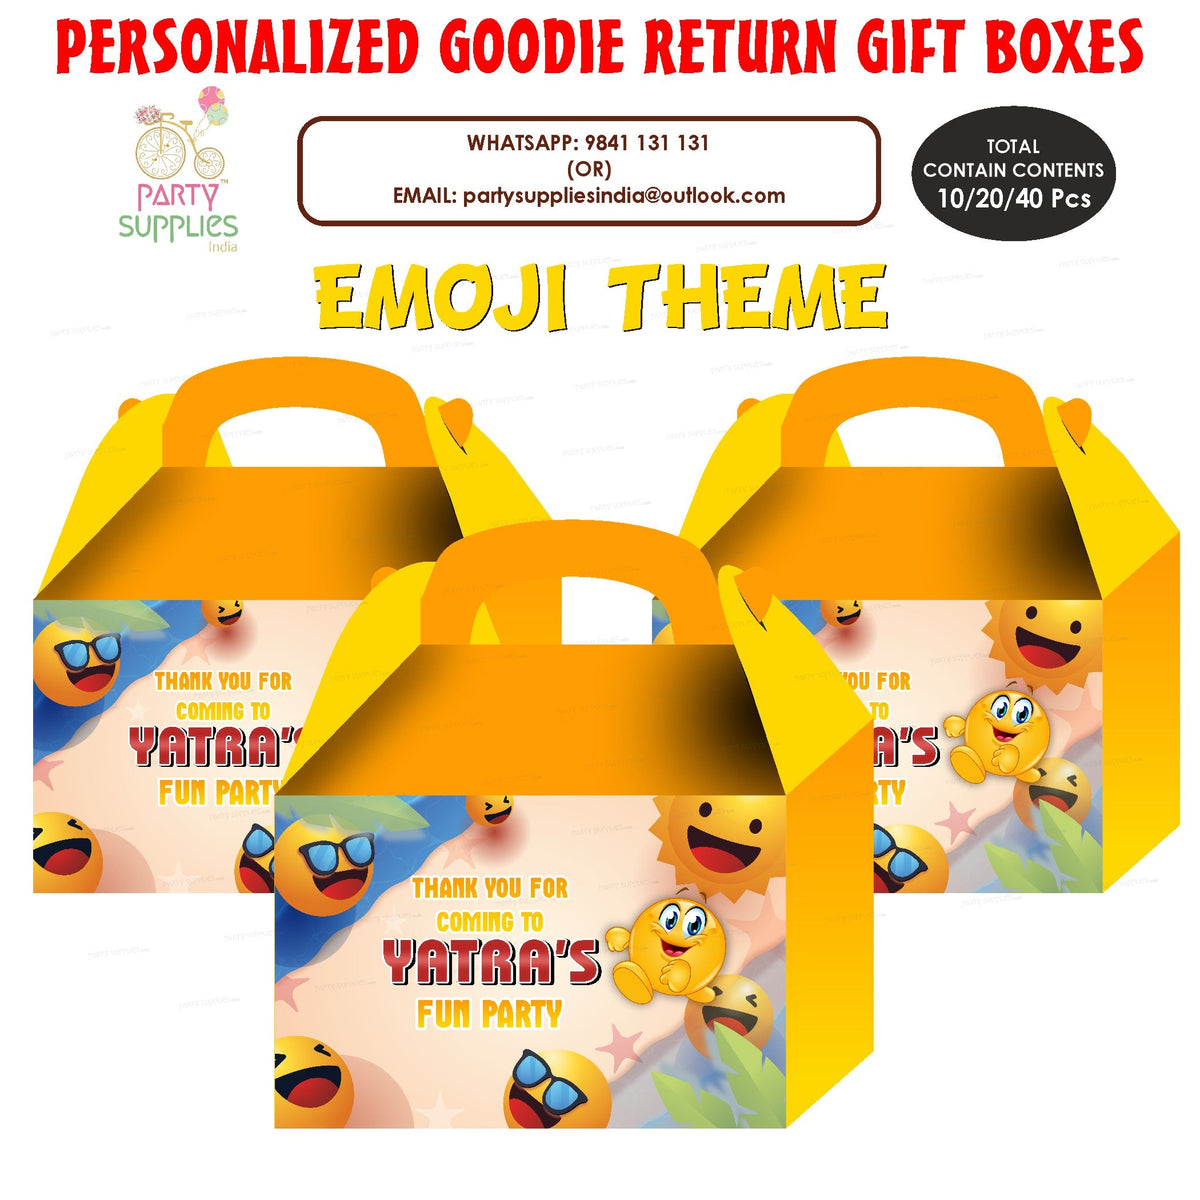 PSI Emoji theme Goodie Return Gift Boxes